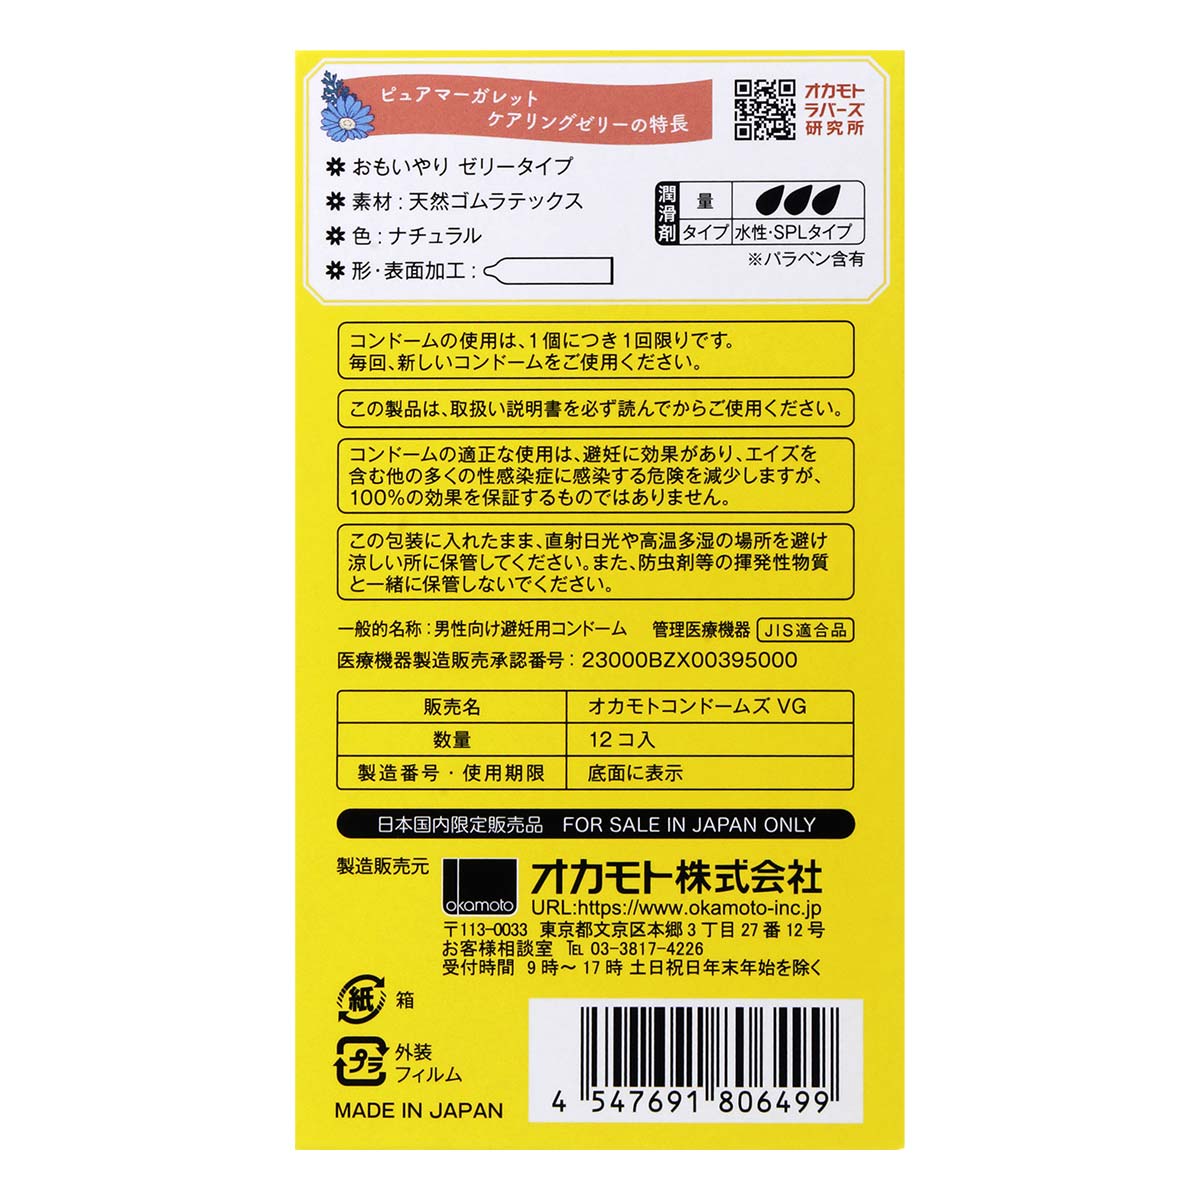 Okamoto Pure Margaret Caring Jelly (Japan Edition) 12 pieces Latex Condom-p_3